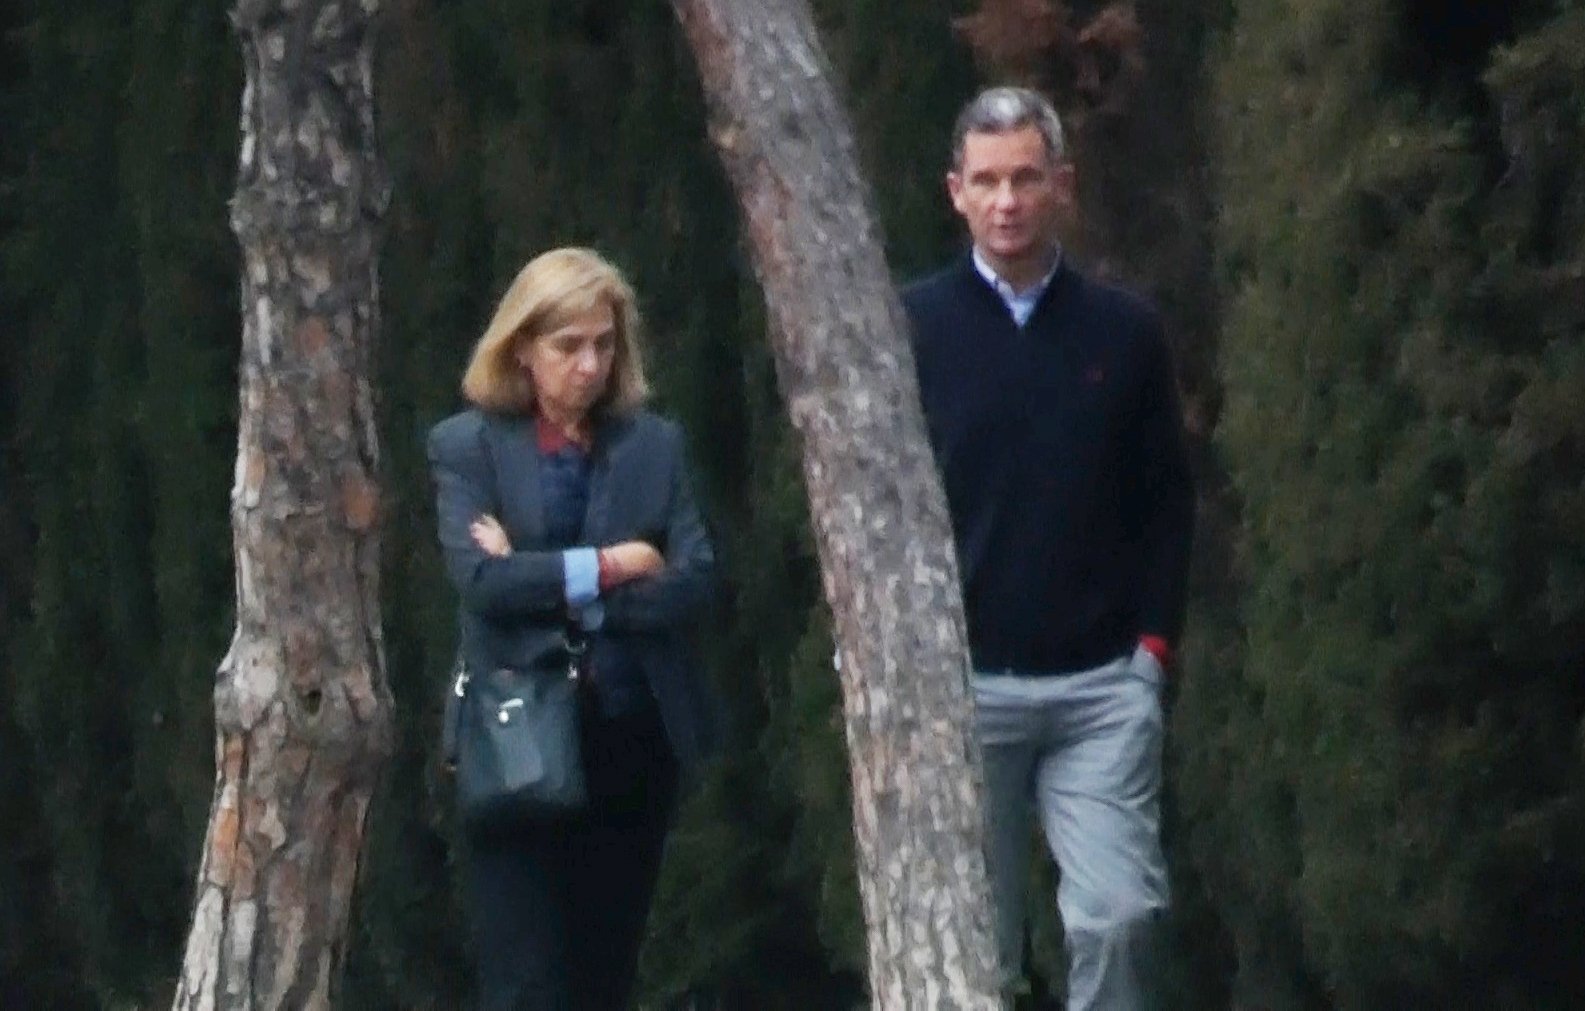 Spanish princess Cristina and Iñaki Urdangarin to separate after photos published